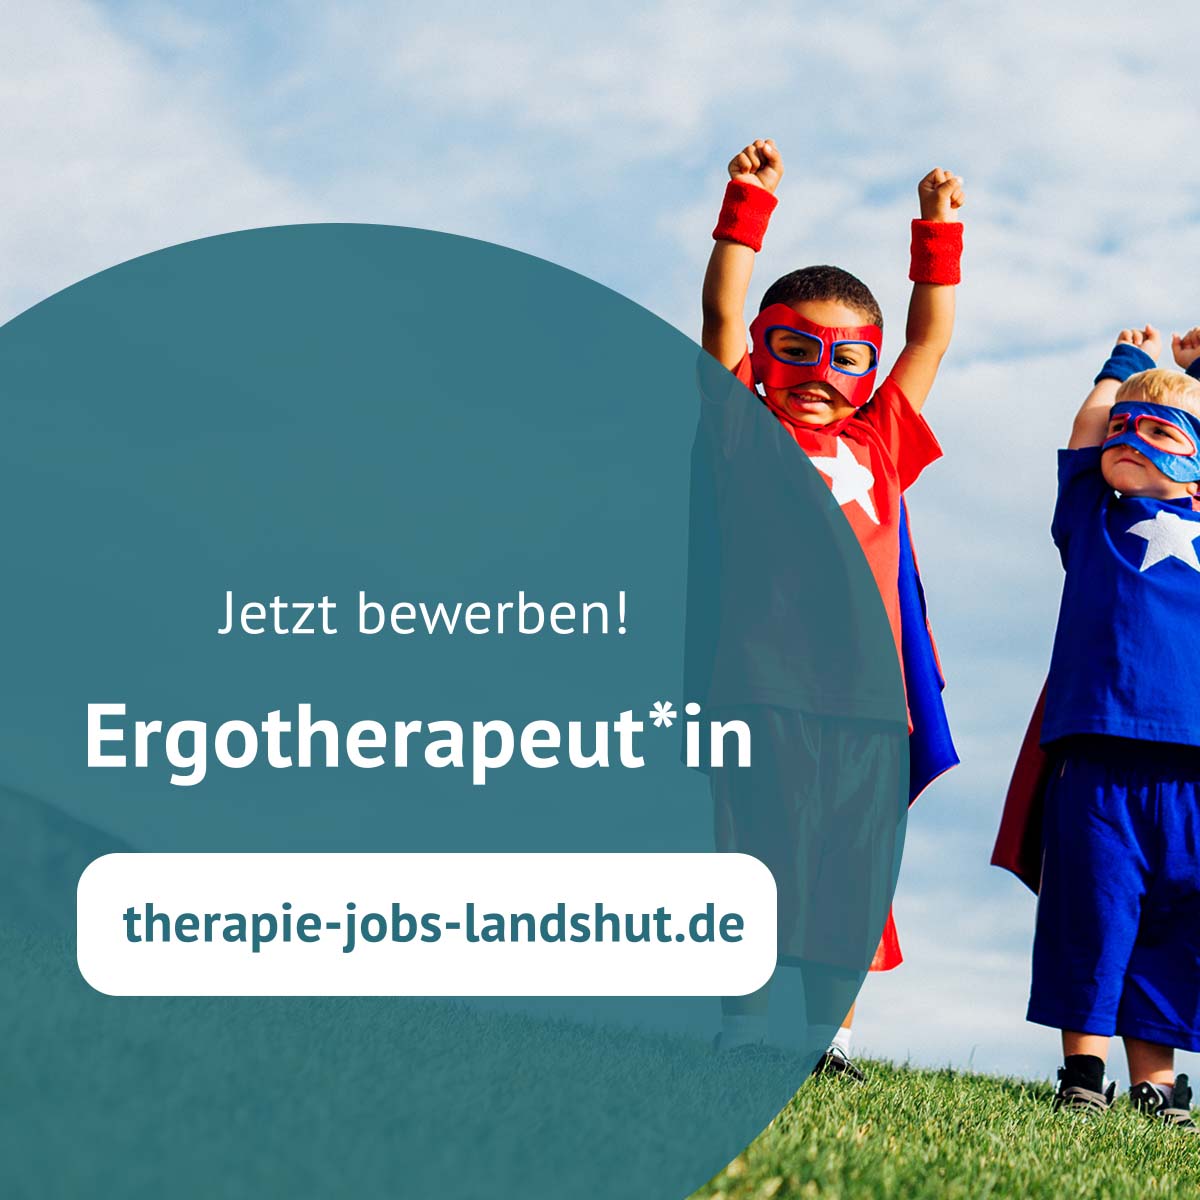 Stellenangebot Ergotherapeutin Ergotherapeut In Landshut